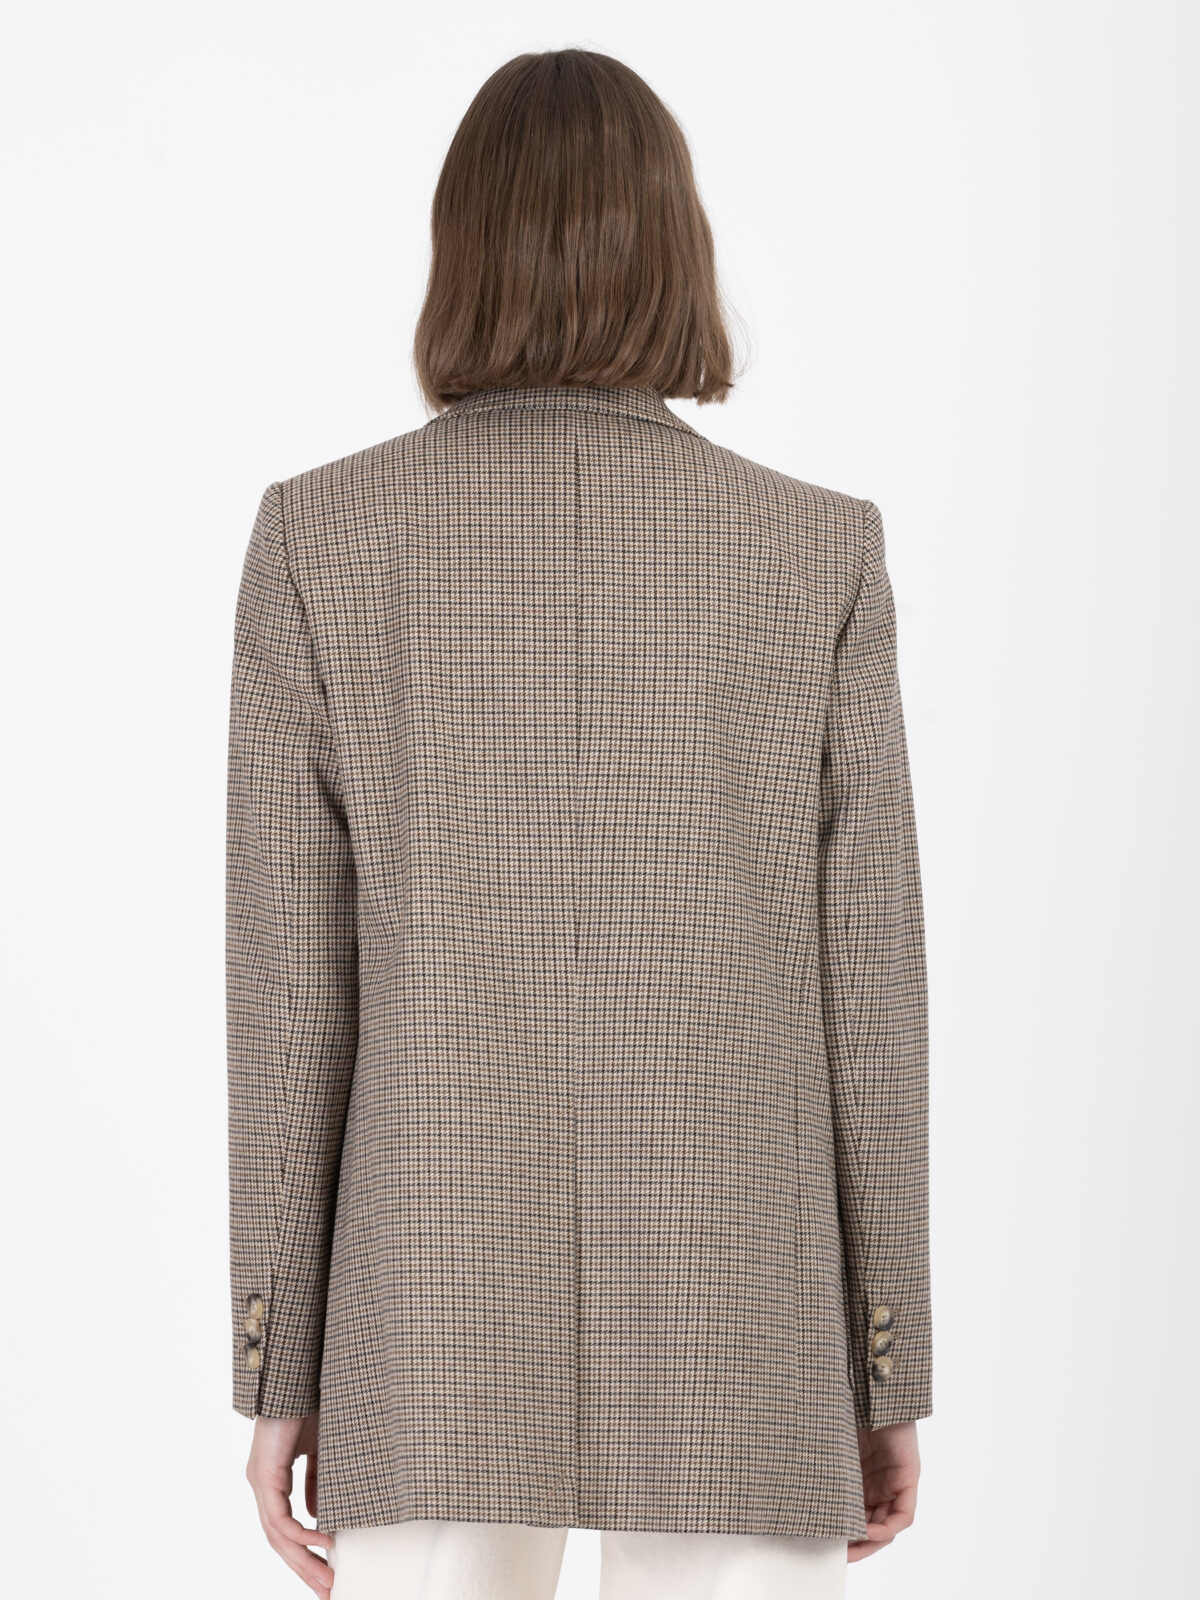 bradley-blazer-checked-brown-jacket-oversize-pockets-woll-vanessa-bruno-mathcboxathens